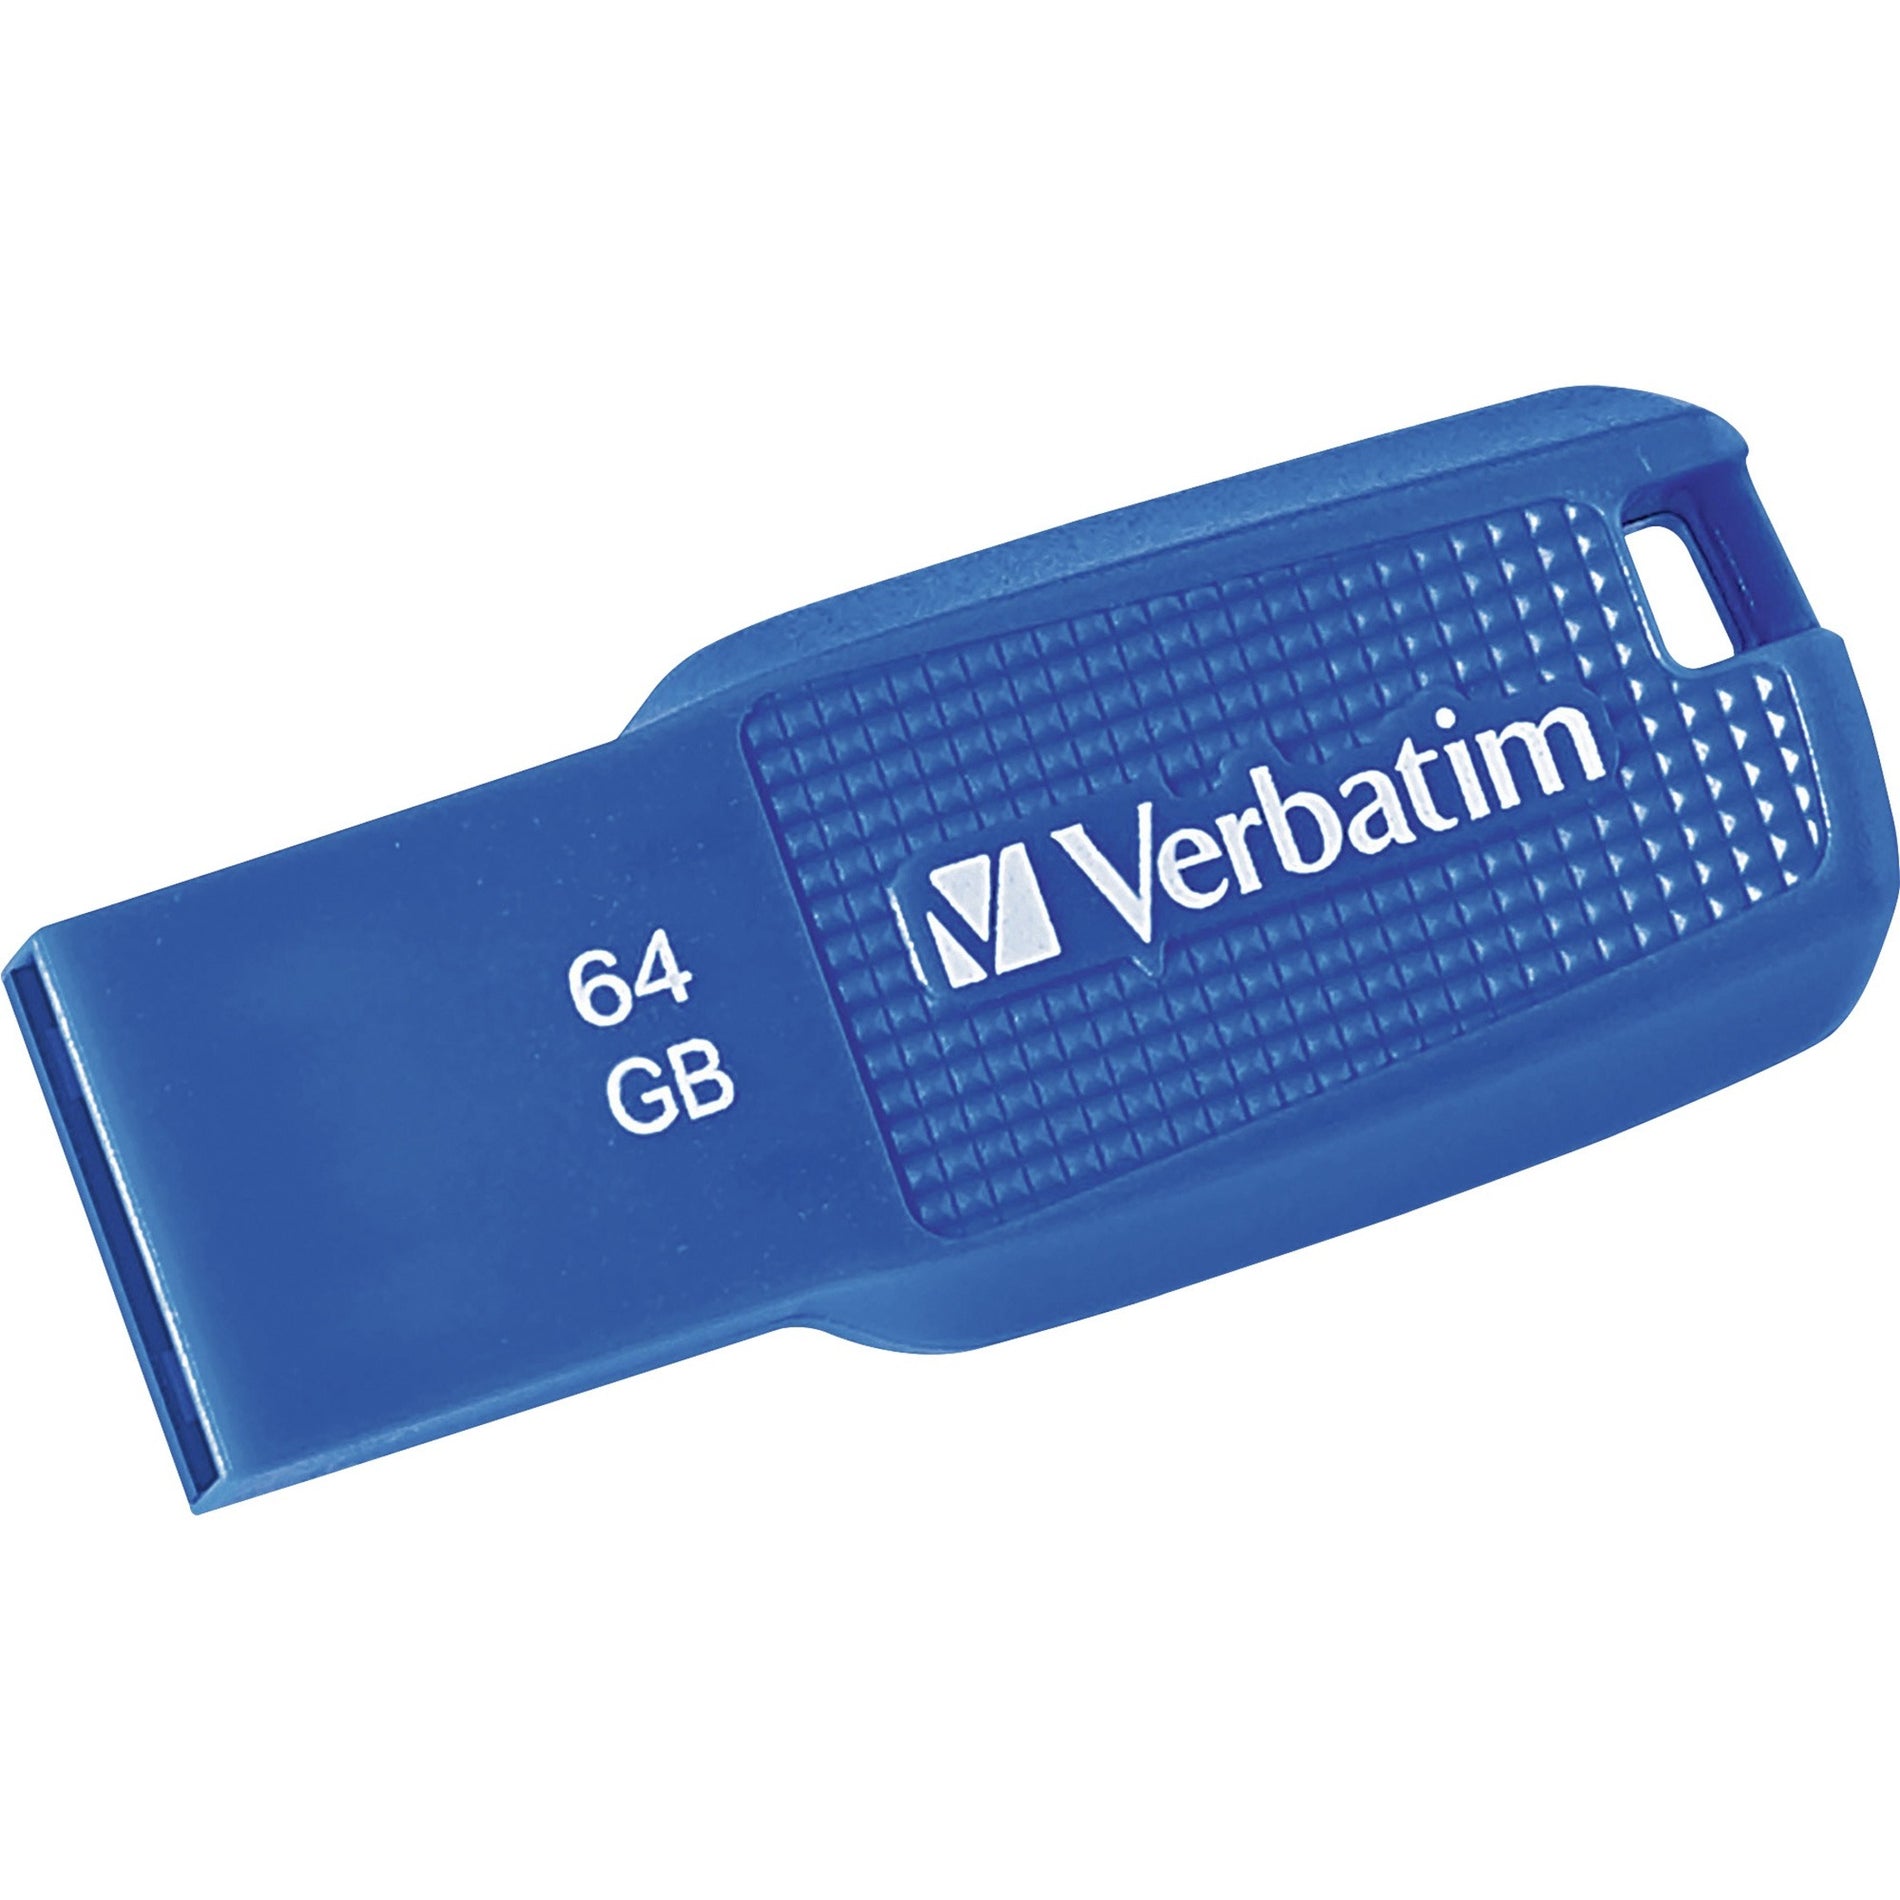 Verbatim 70879 64GB Ergo USB 3.0 Flash Drive - Blue, Capless, Password Protection